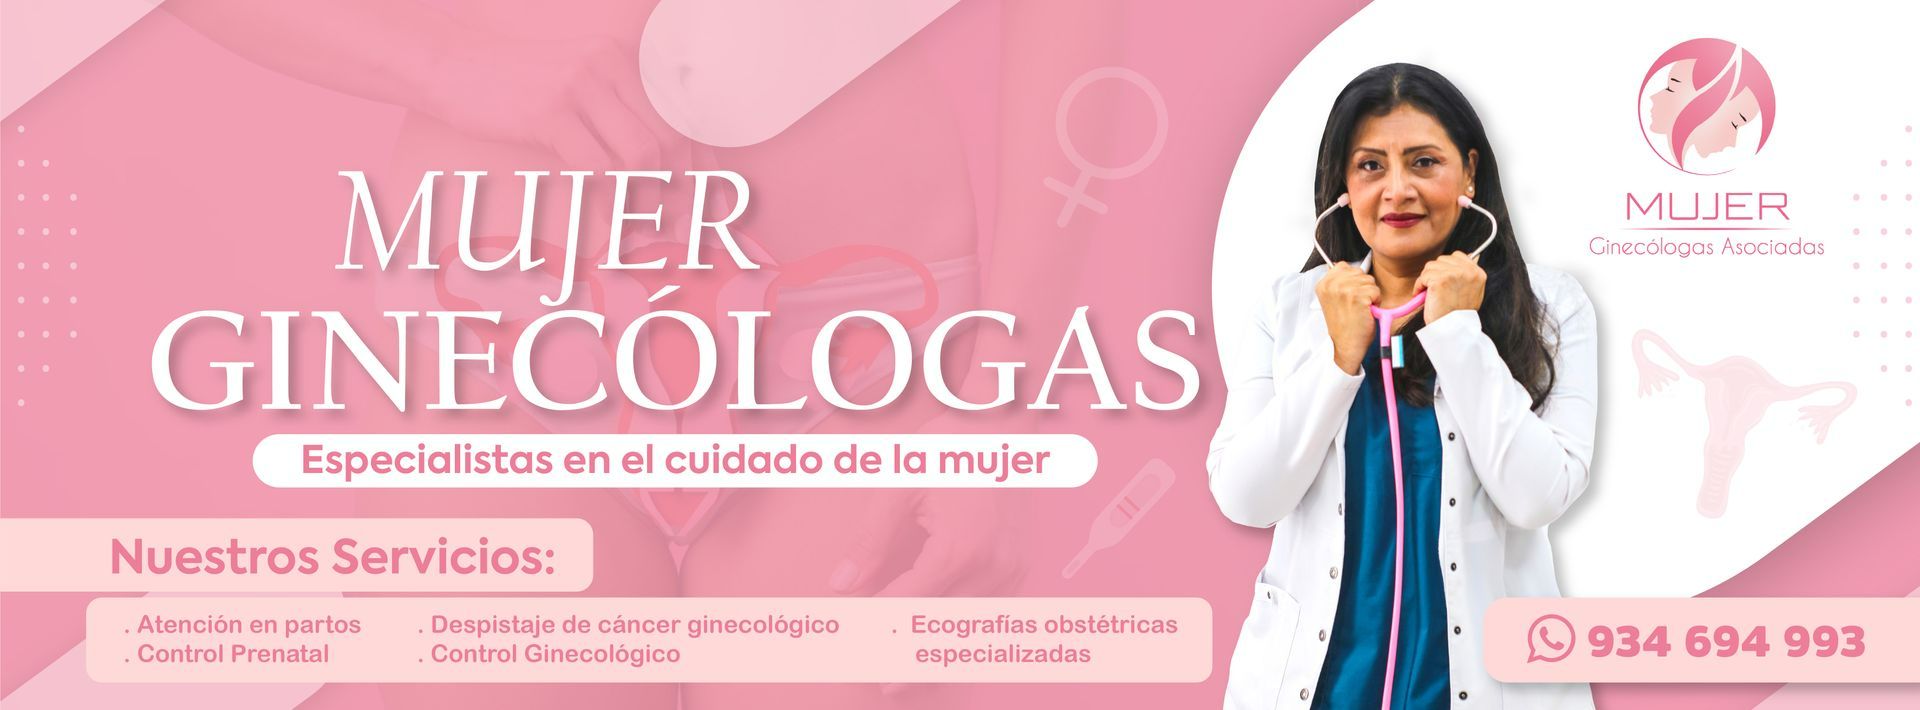 Mujer Ginecólogas Asociadas, chequeo ginecológico.